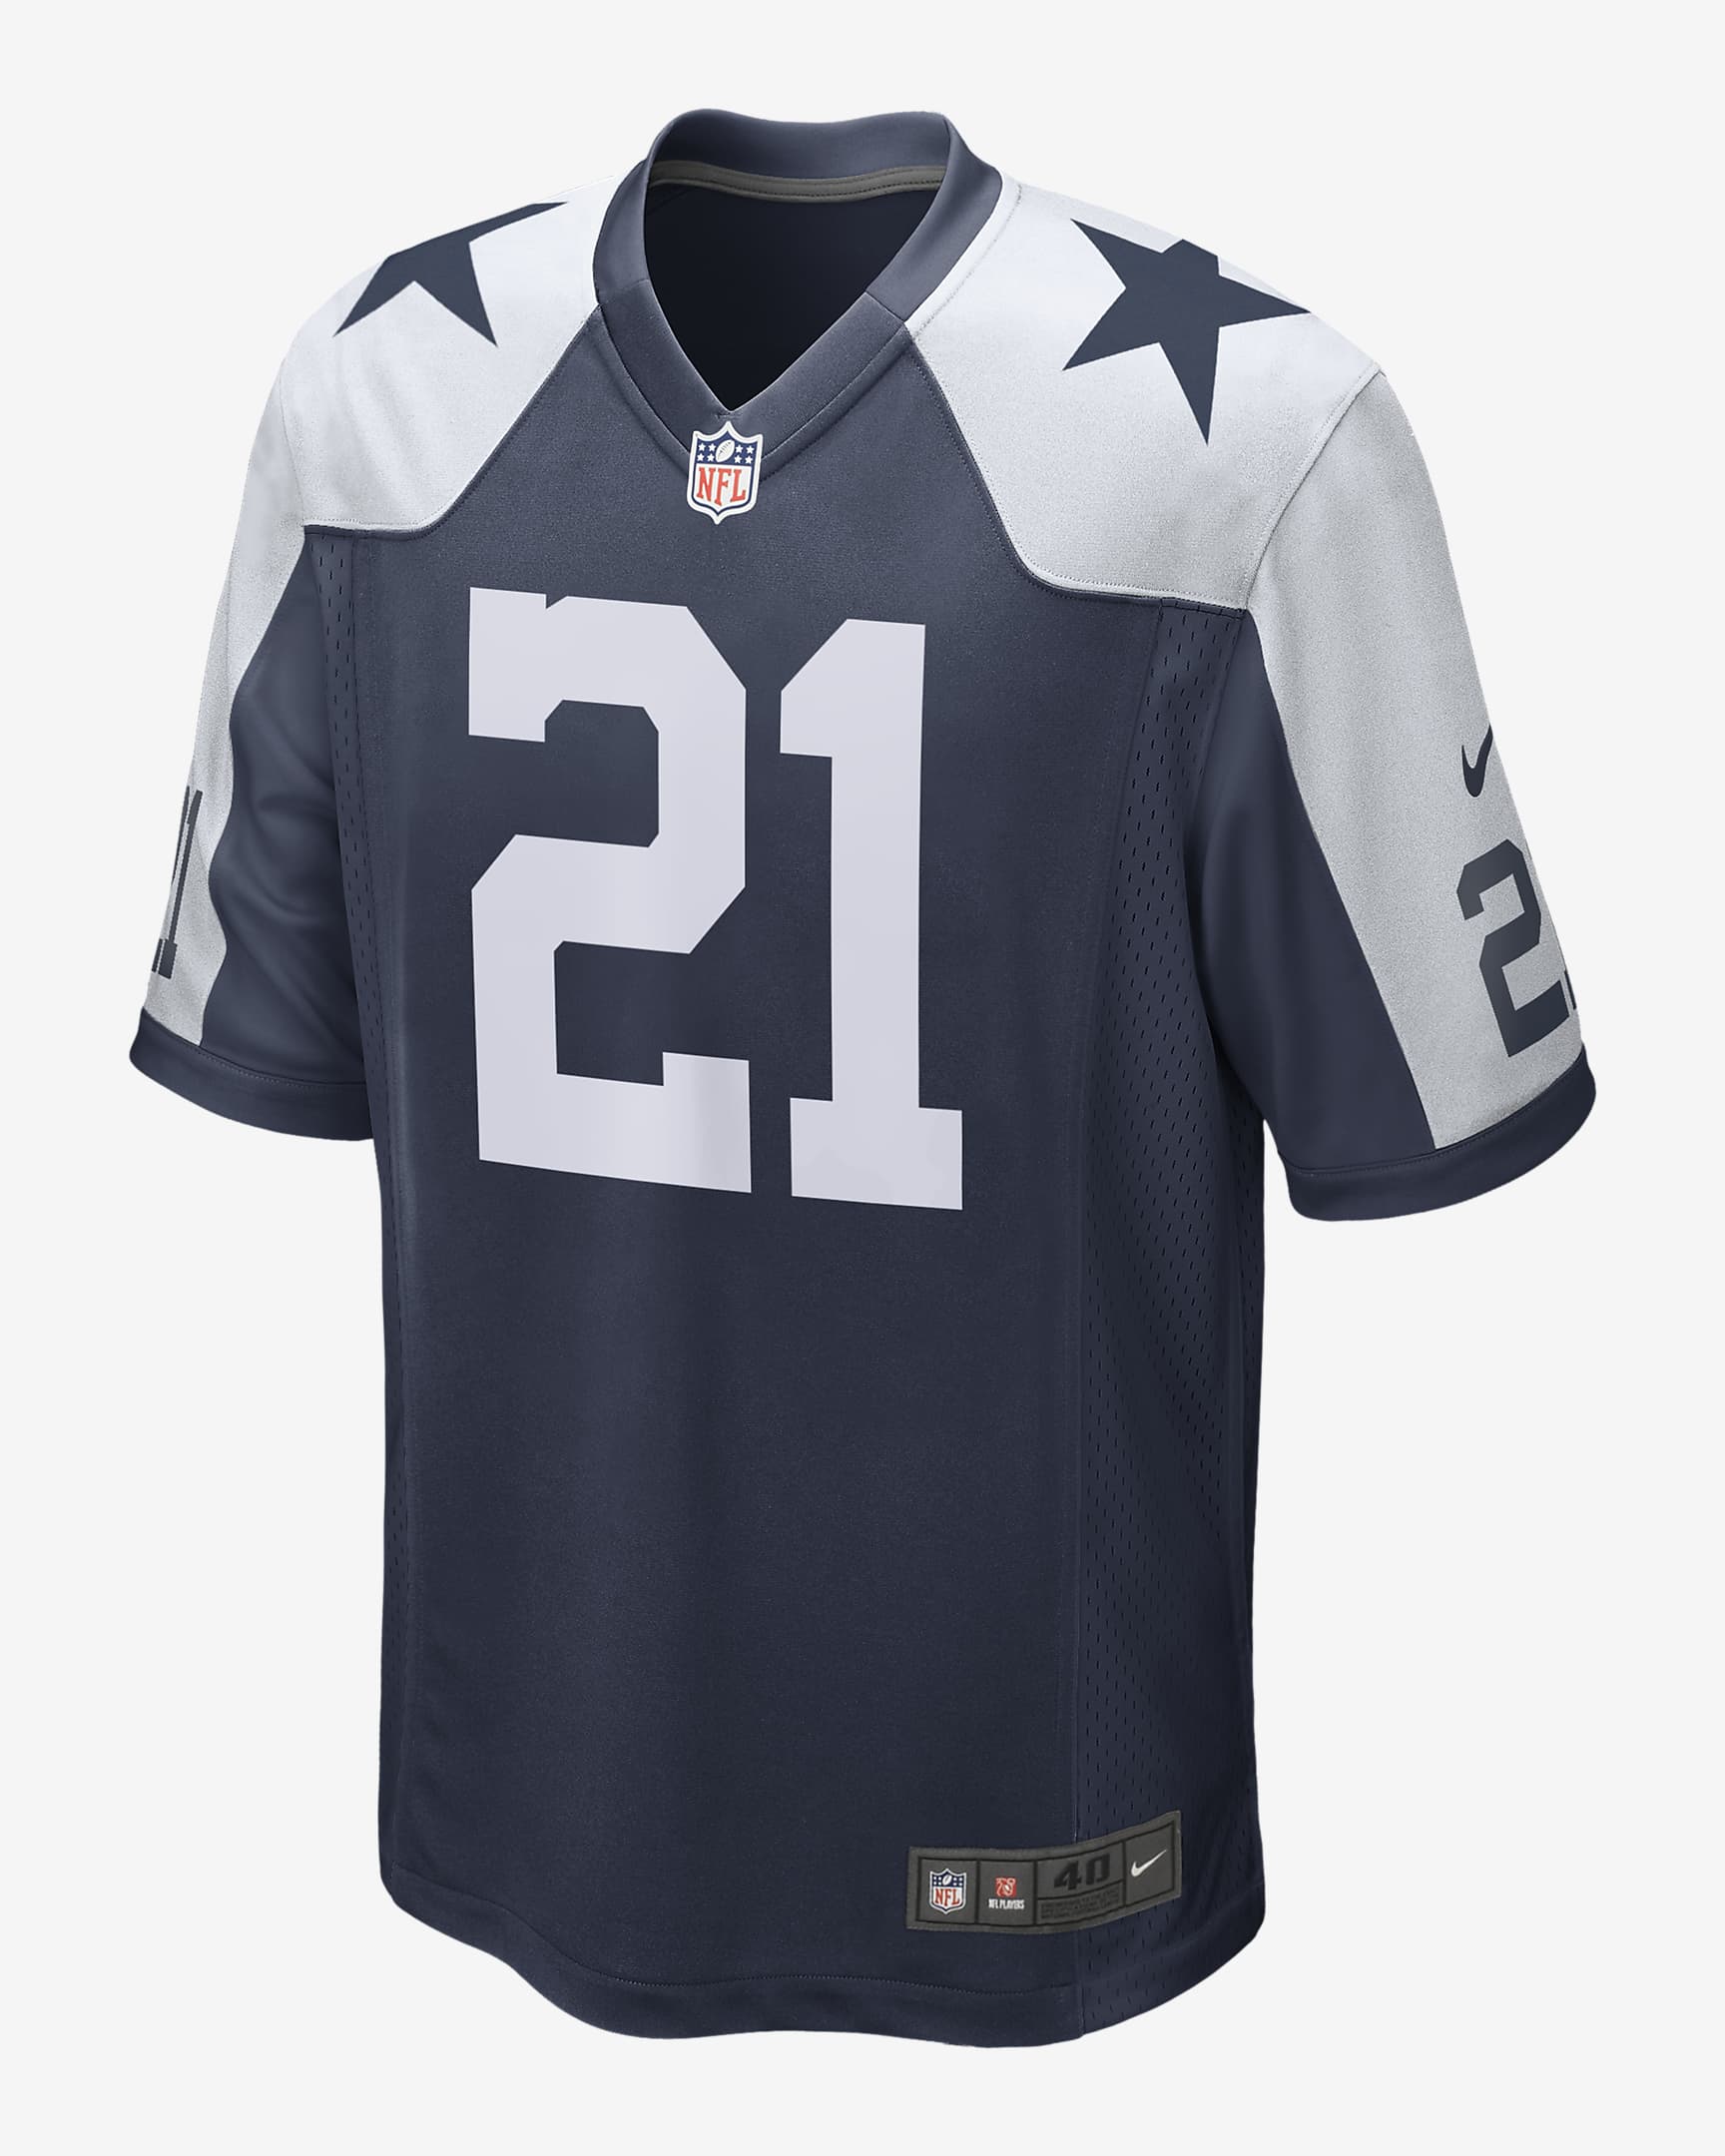 NFL Dallas Cowboys (Ezekiel Elliott) Men's Game Football Jersey. Nike.com